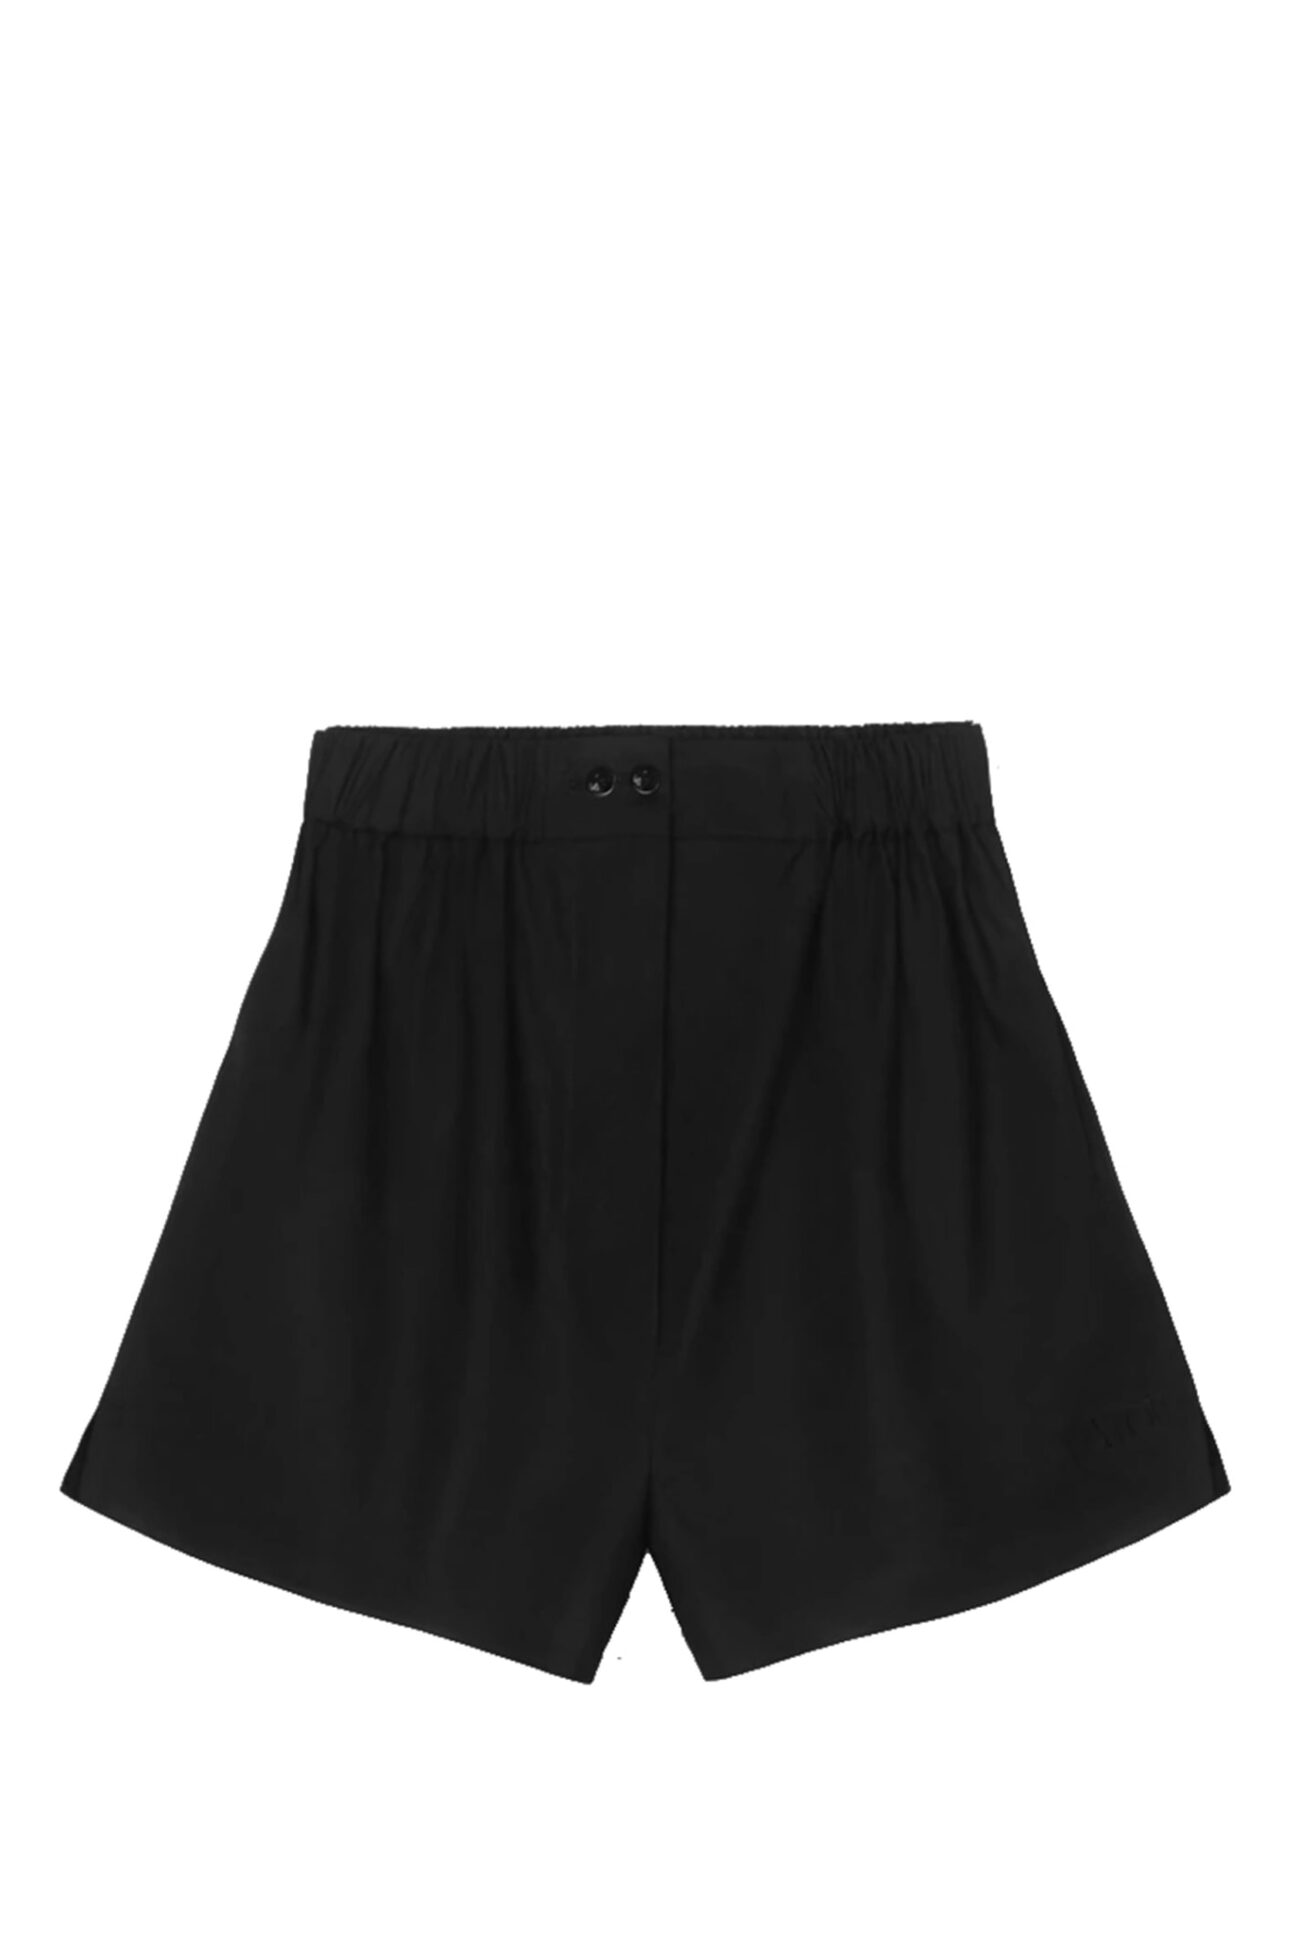 Patou Cotton Shorts in black